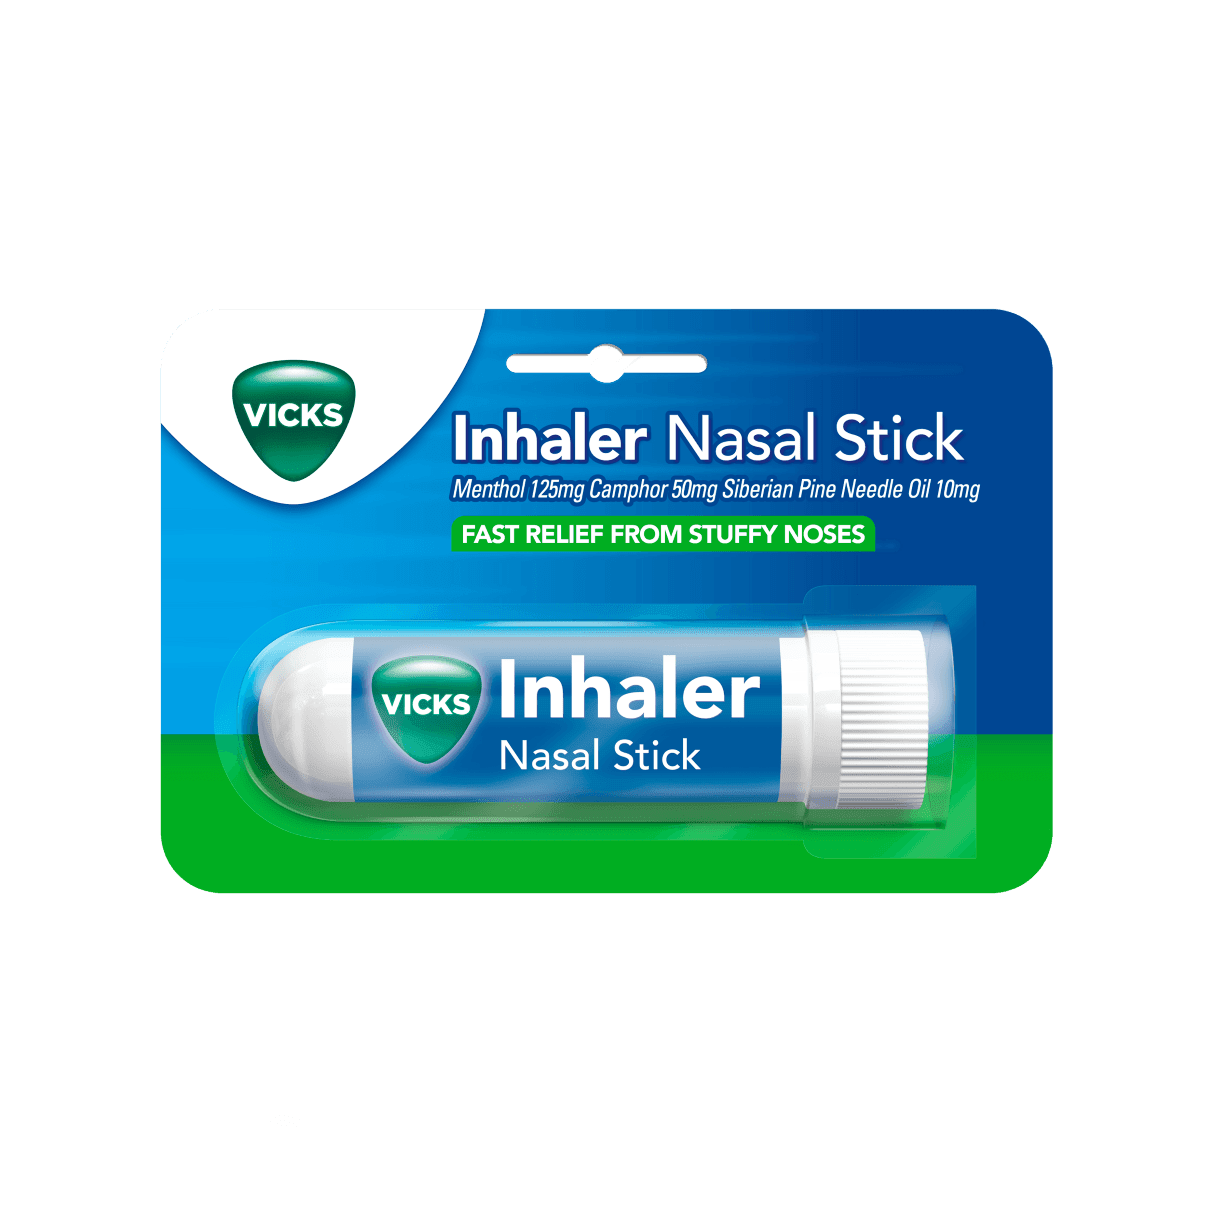 Vicks Inhaler Nasal Stick to Relieve Nasal Congestion